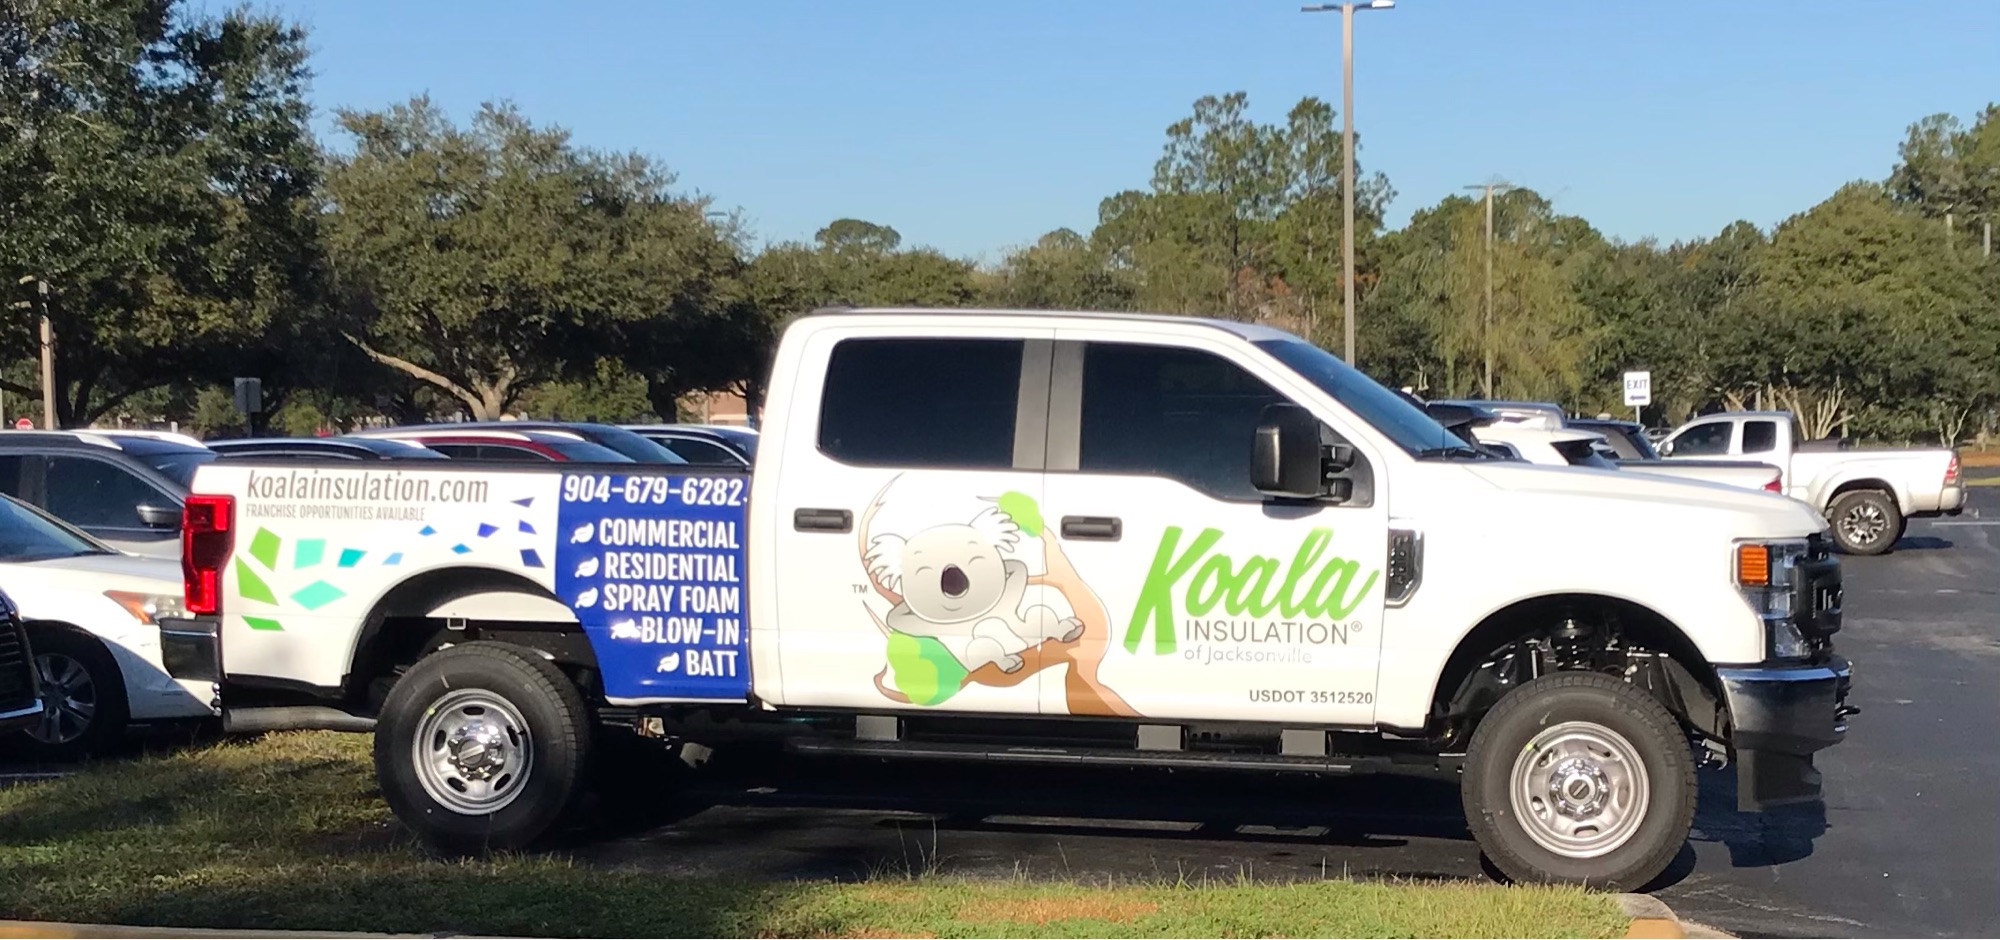 Koala Insulation of Jacksonville Logo